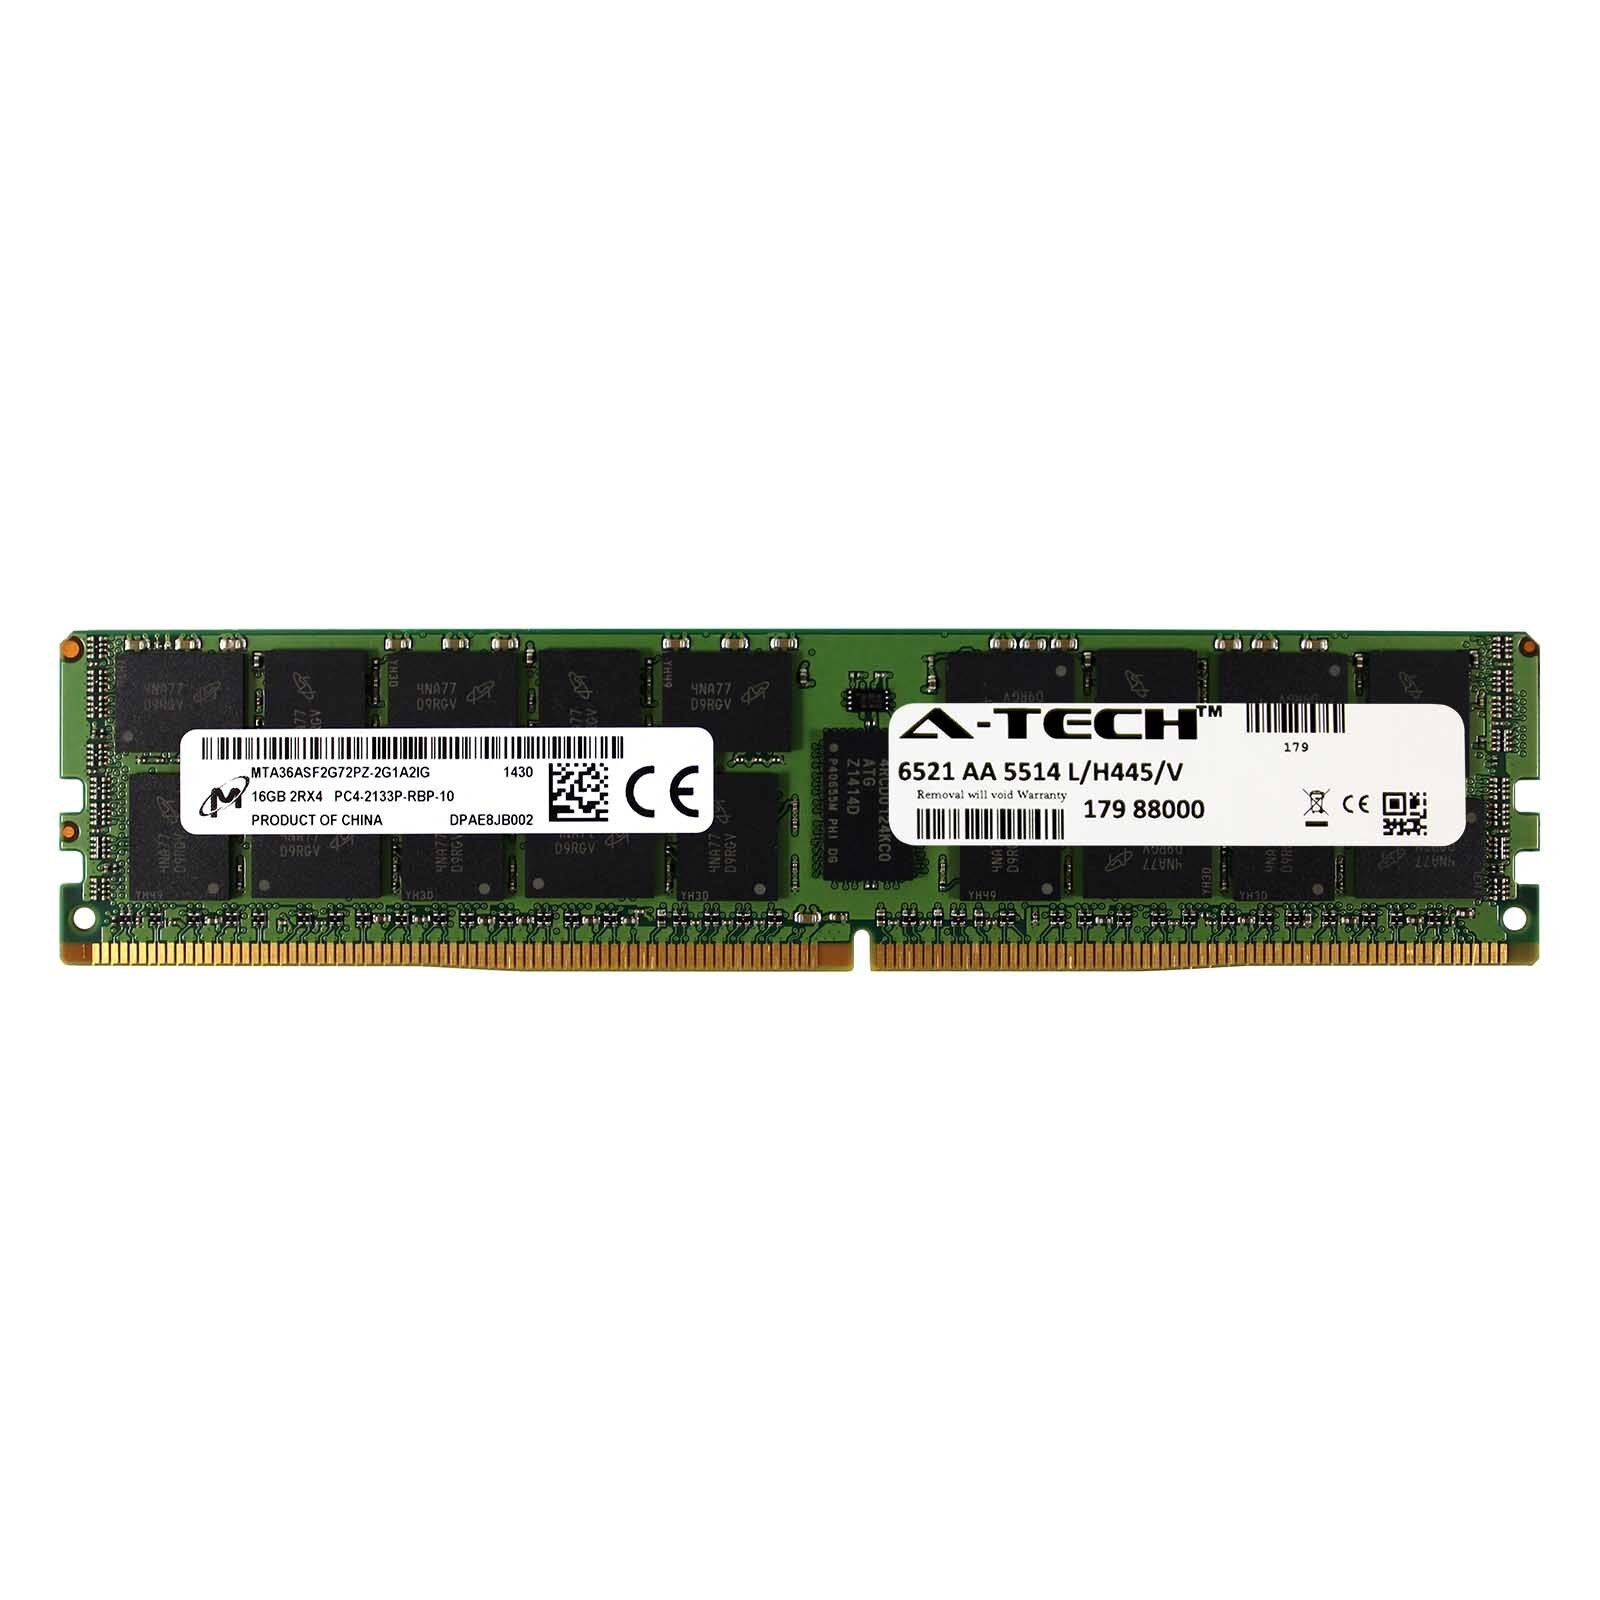 Micron 16GB PC4-17000 Module Memory RAM for DELL POWEREDGE R730xd R730 R630 T630